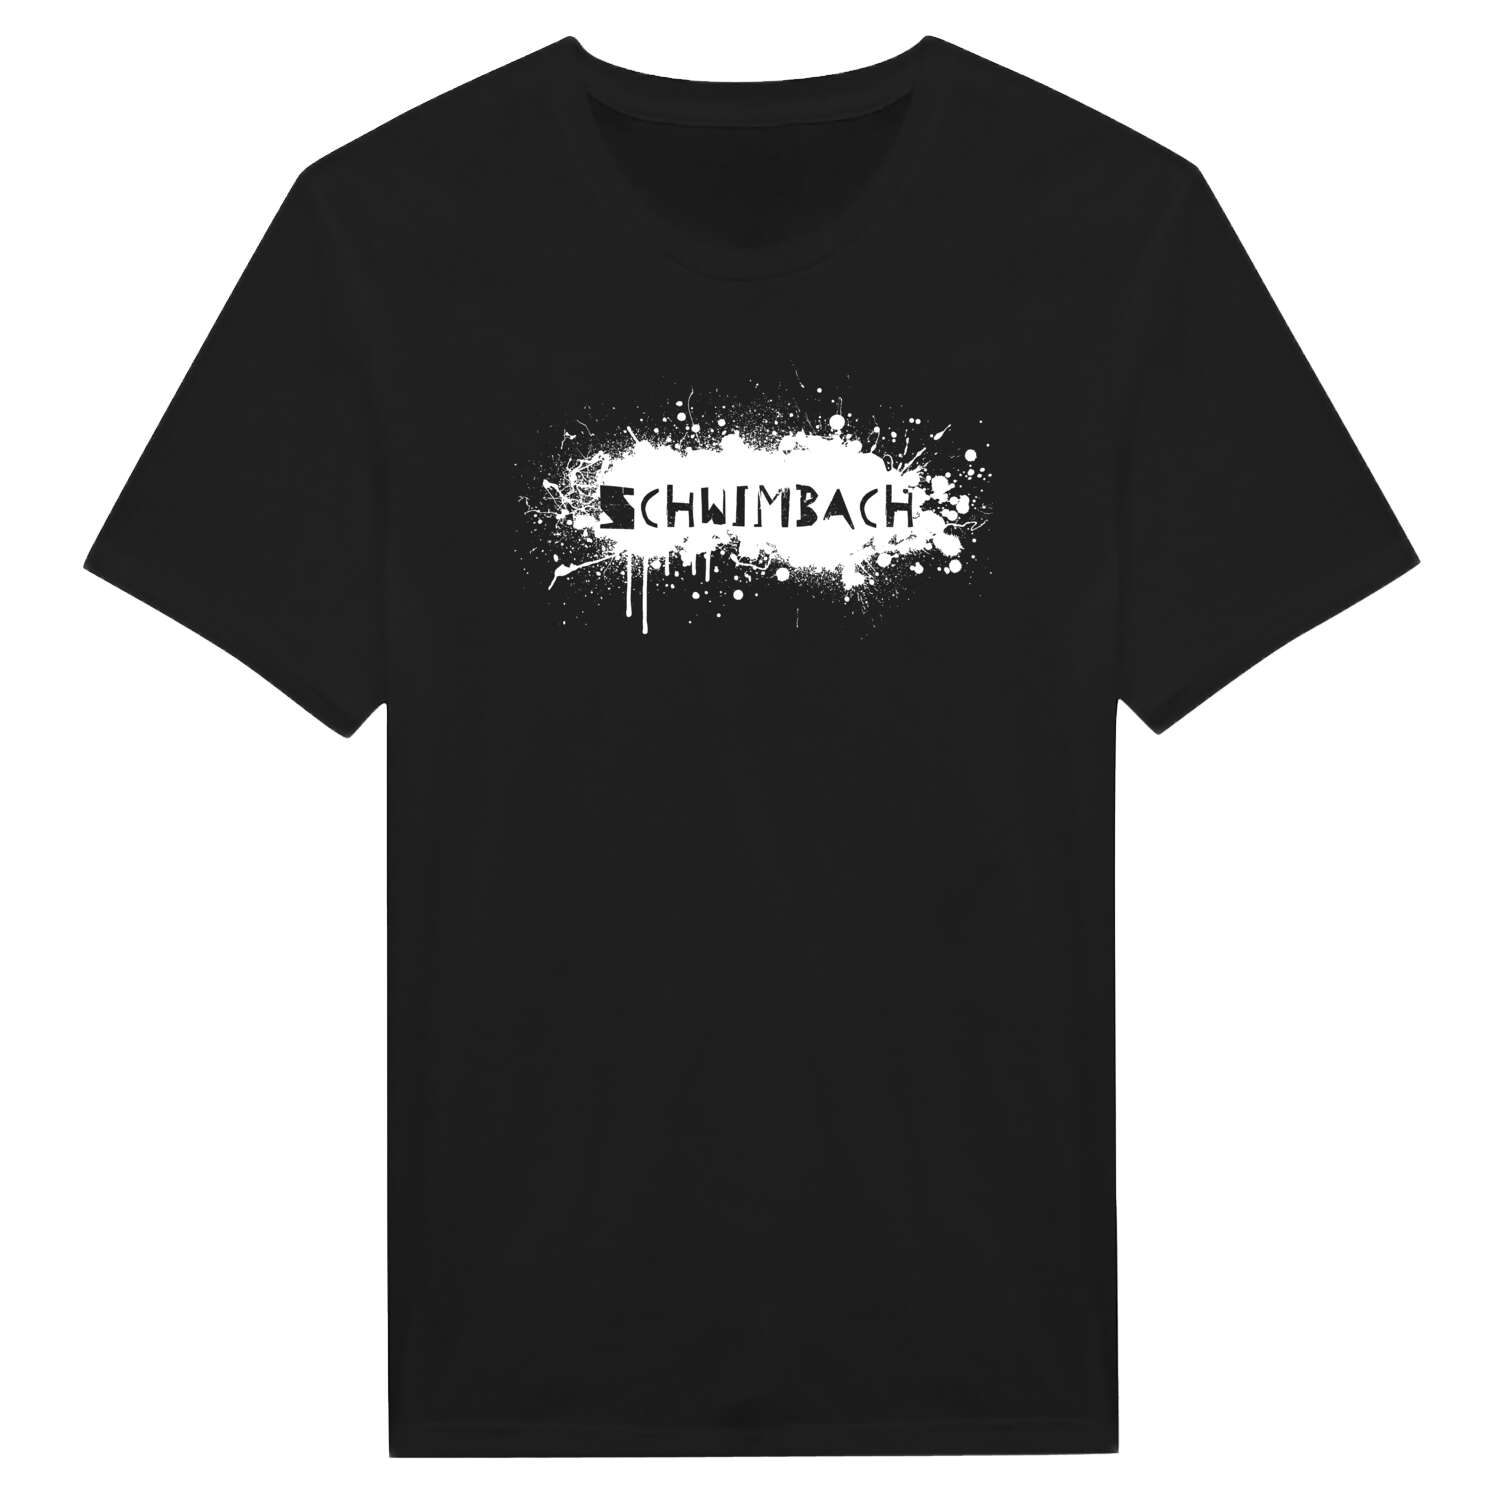 Schwimbach T-Shirt »Paint Splash Punk«